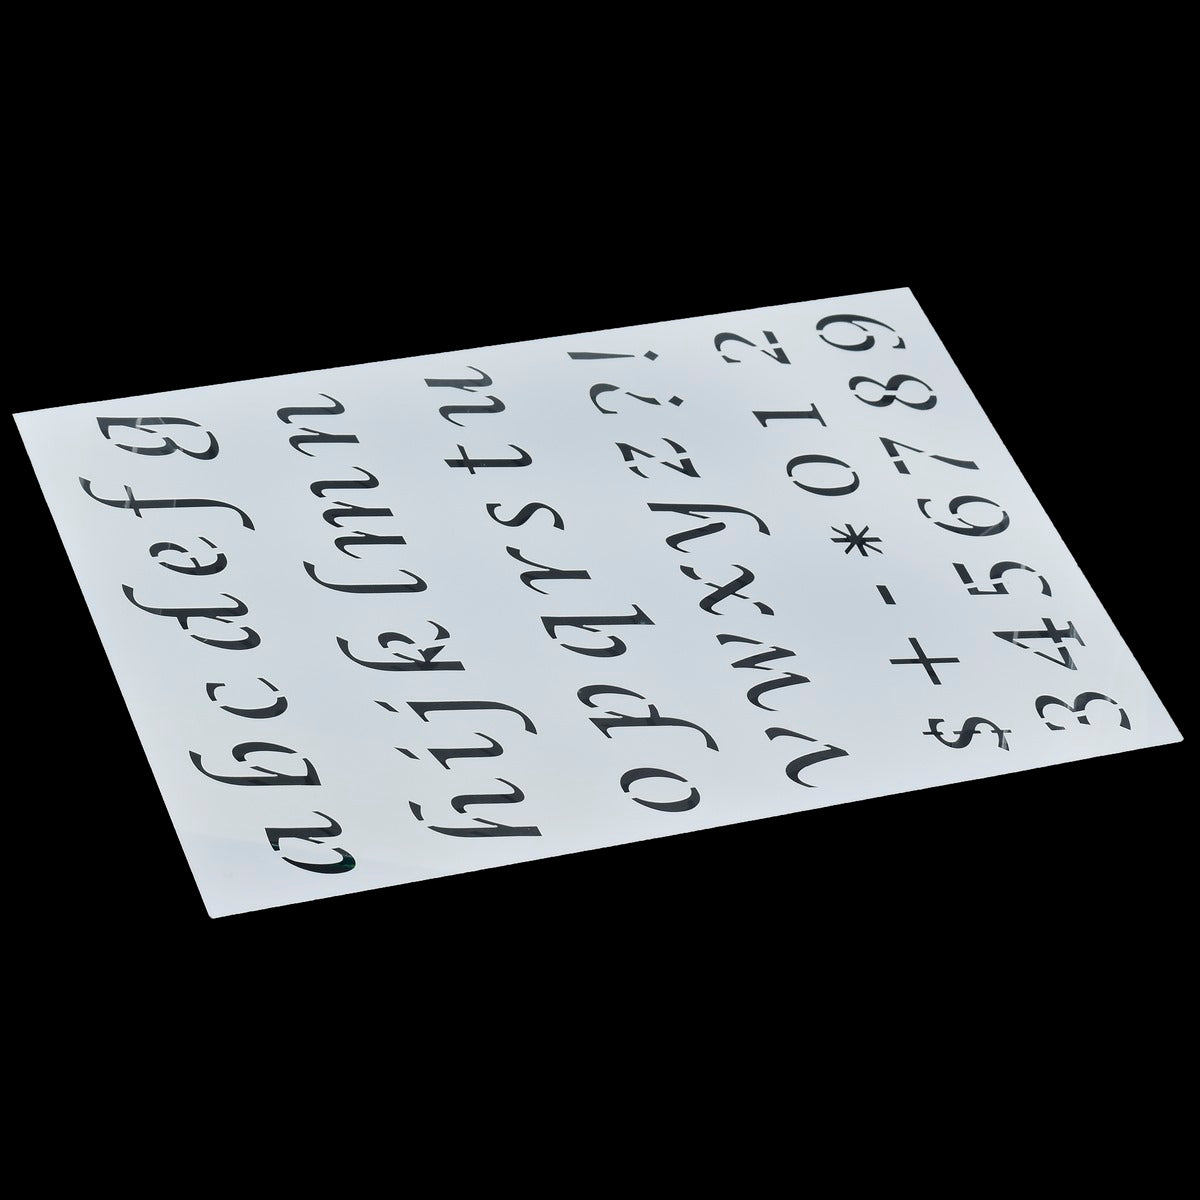 jags-mumbai Stencil Stencil Plastic A4 A to Z/0 to 9 Small letter symbols